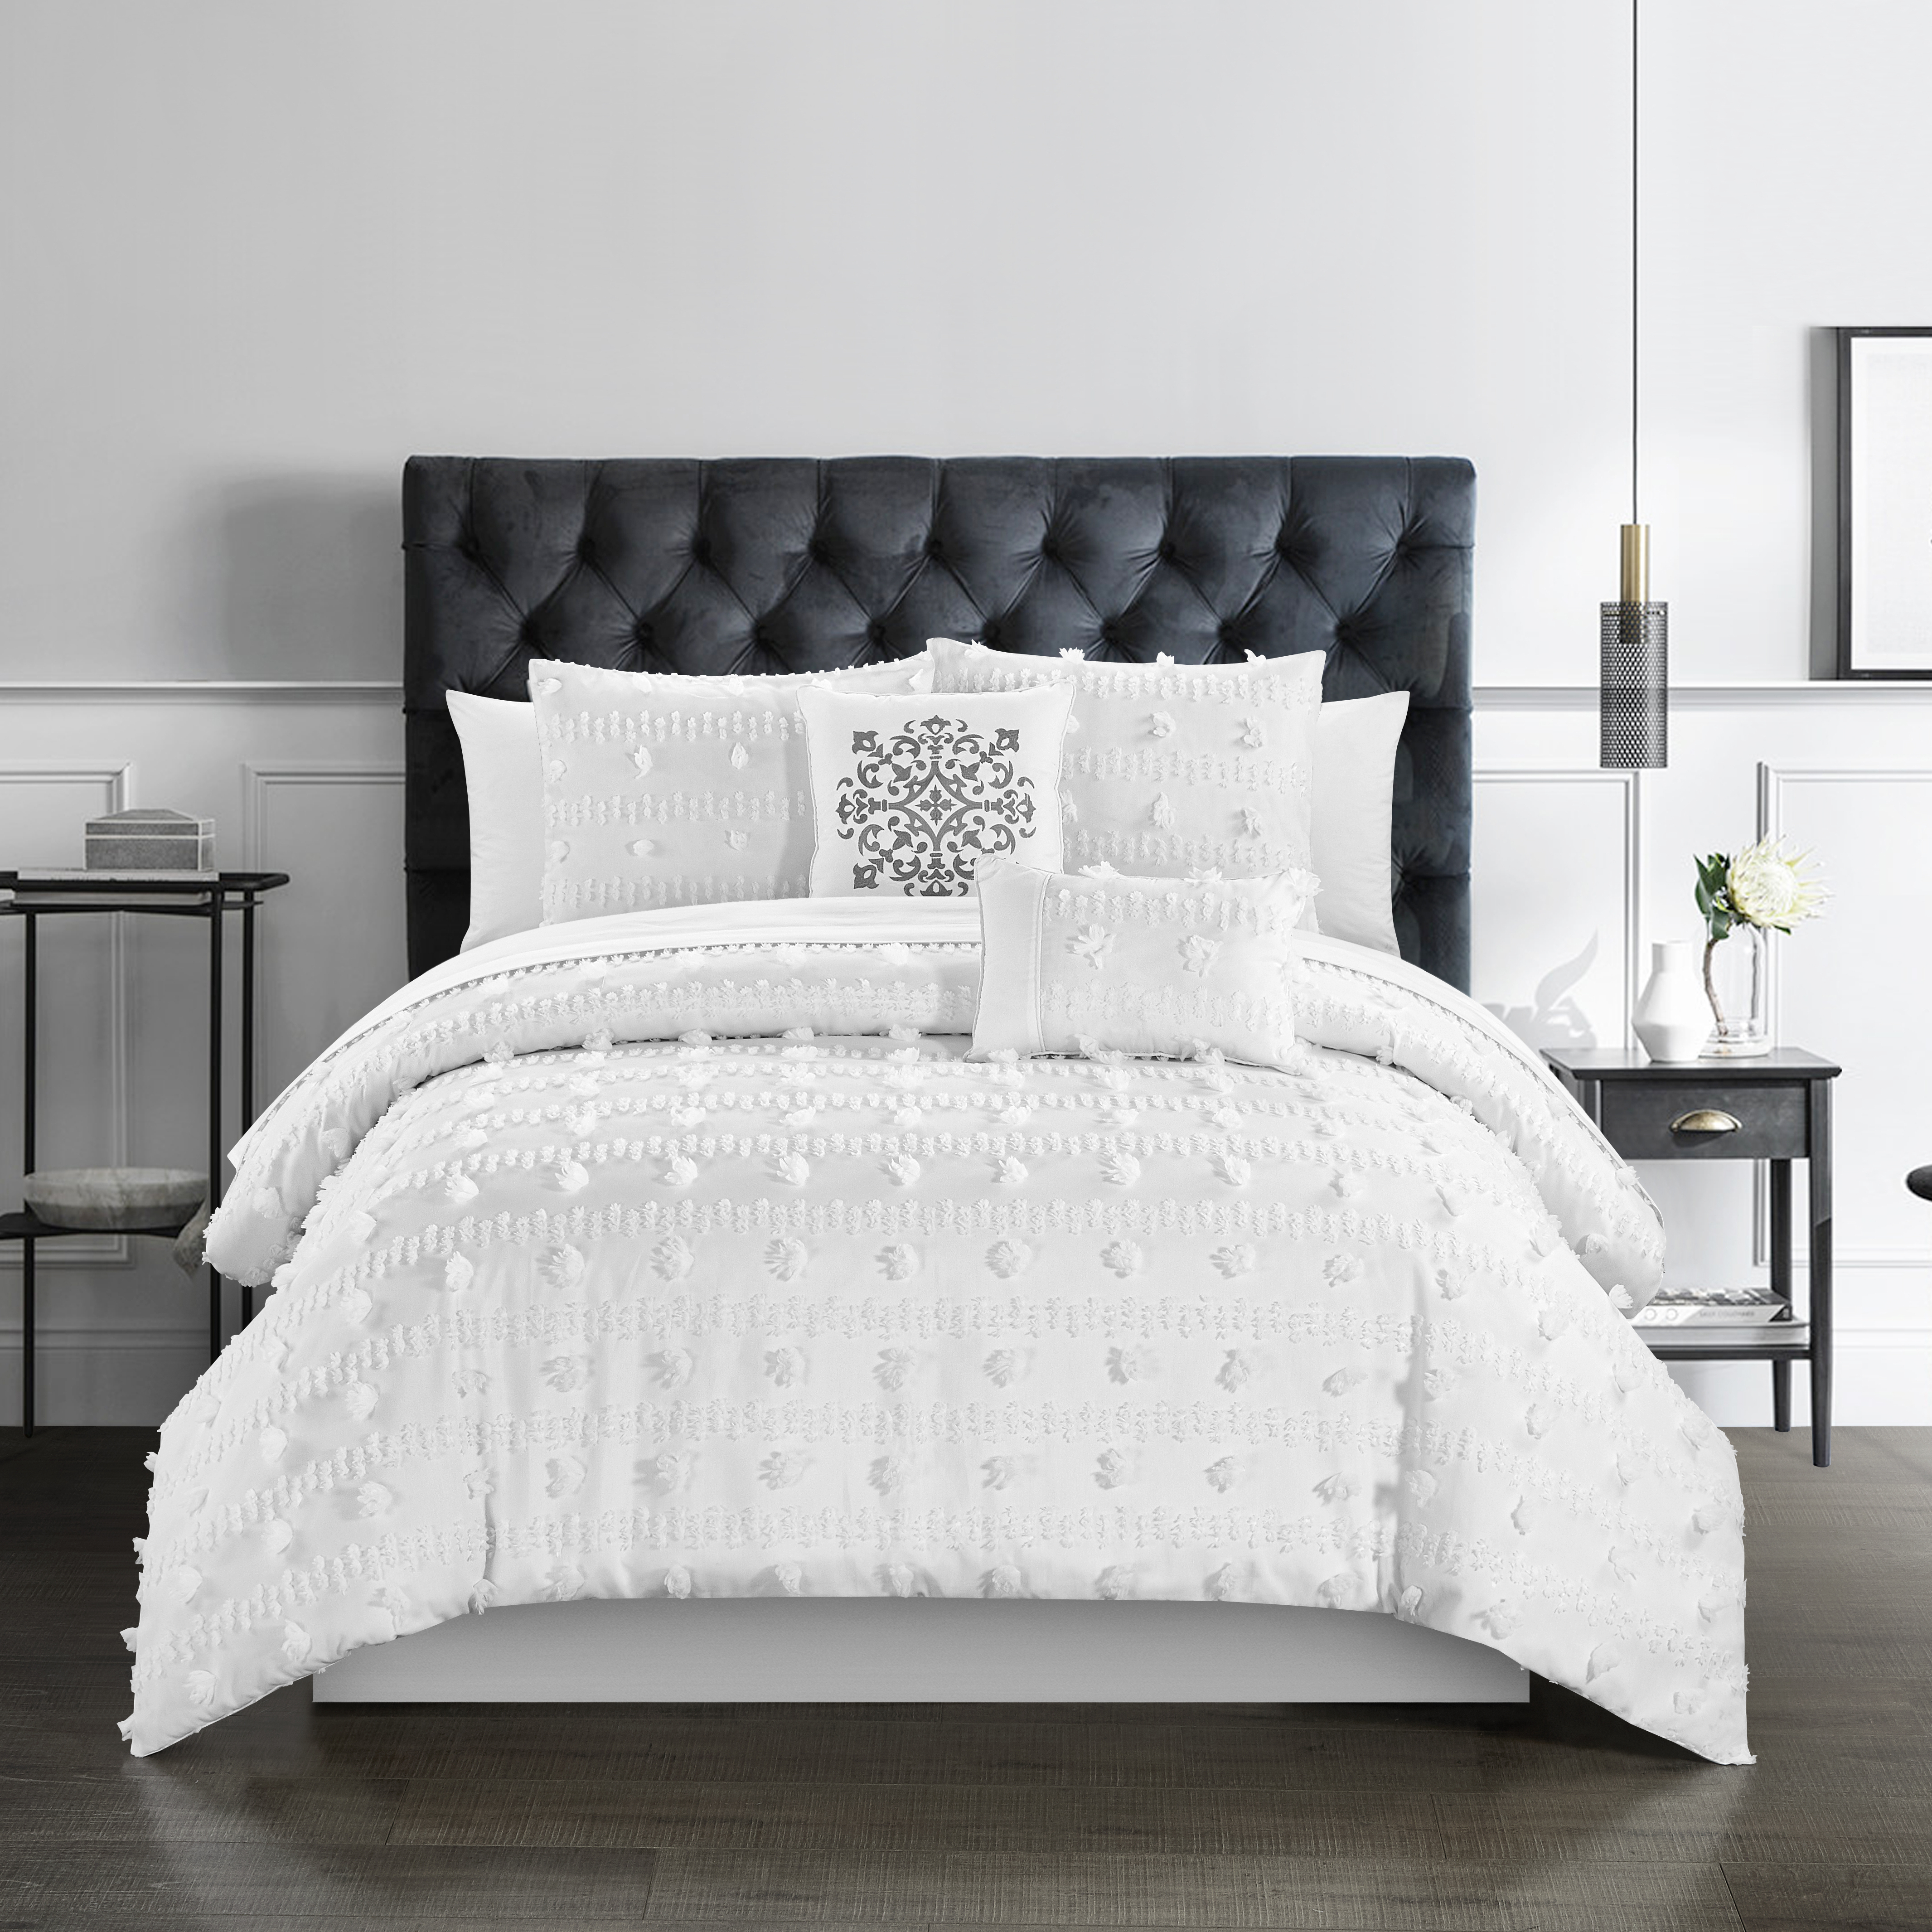 Ahtisa 5 Piece Comforter Set Jacquard Floral Applique Design Bedding - White, Queen